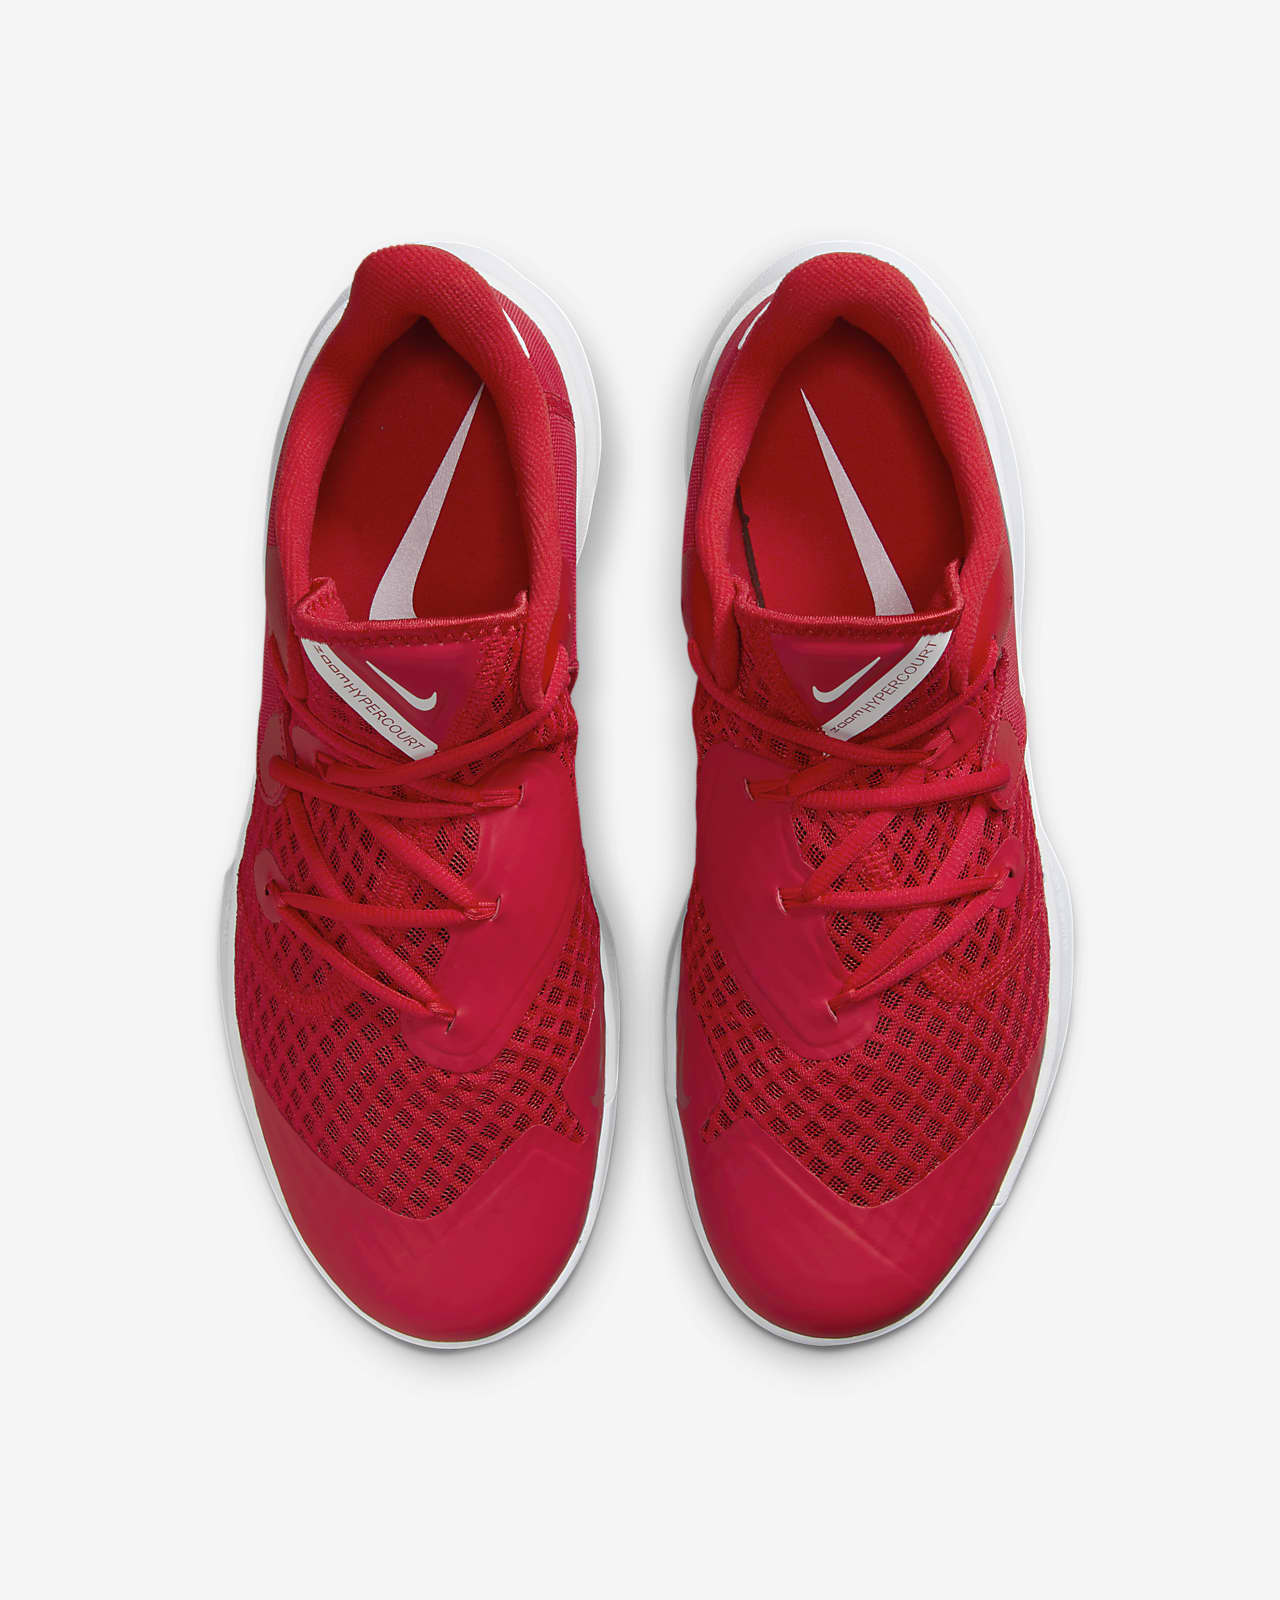 Zapatillas Voley-Balonmano Nike React Hyperspeed Court SE Unisex